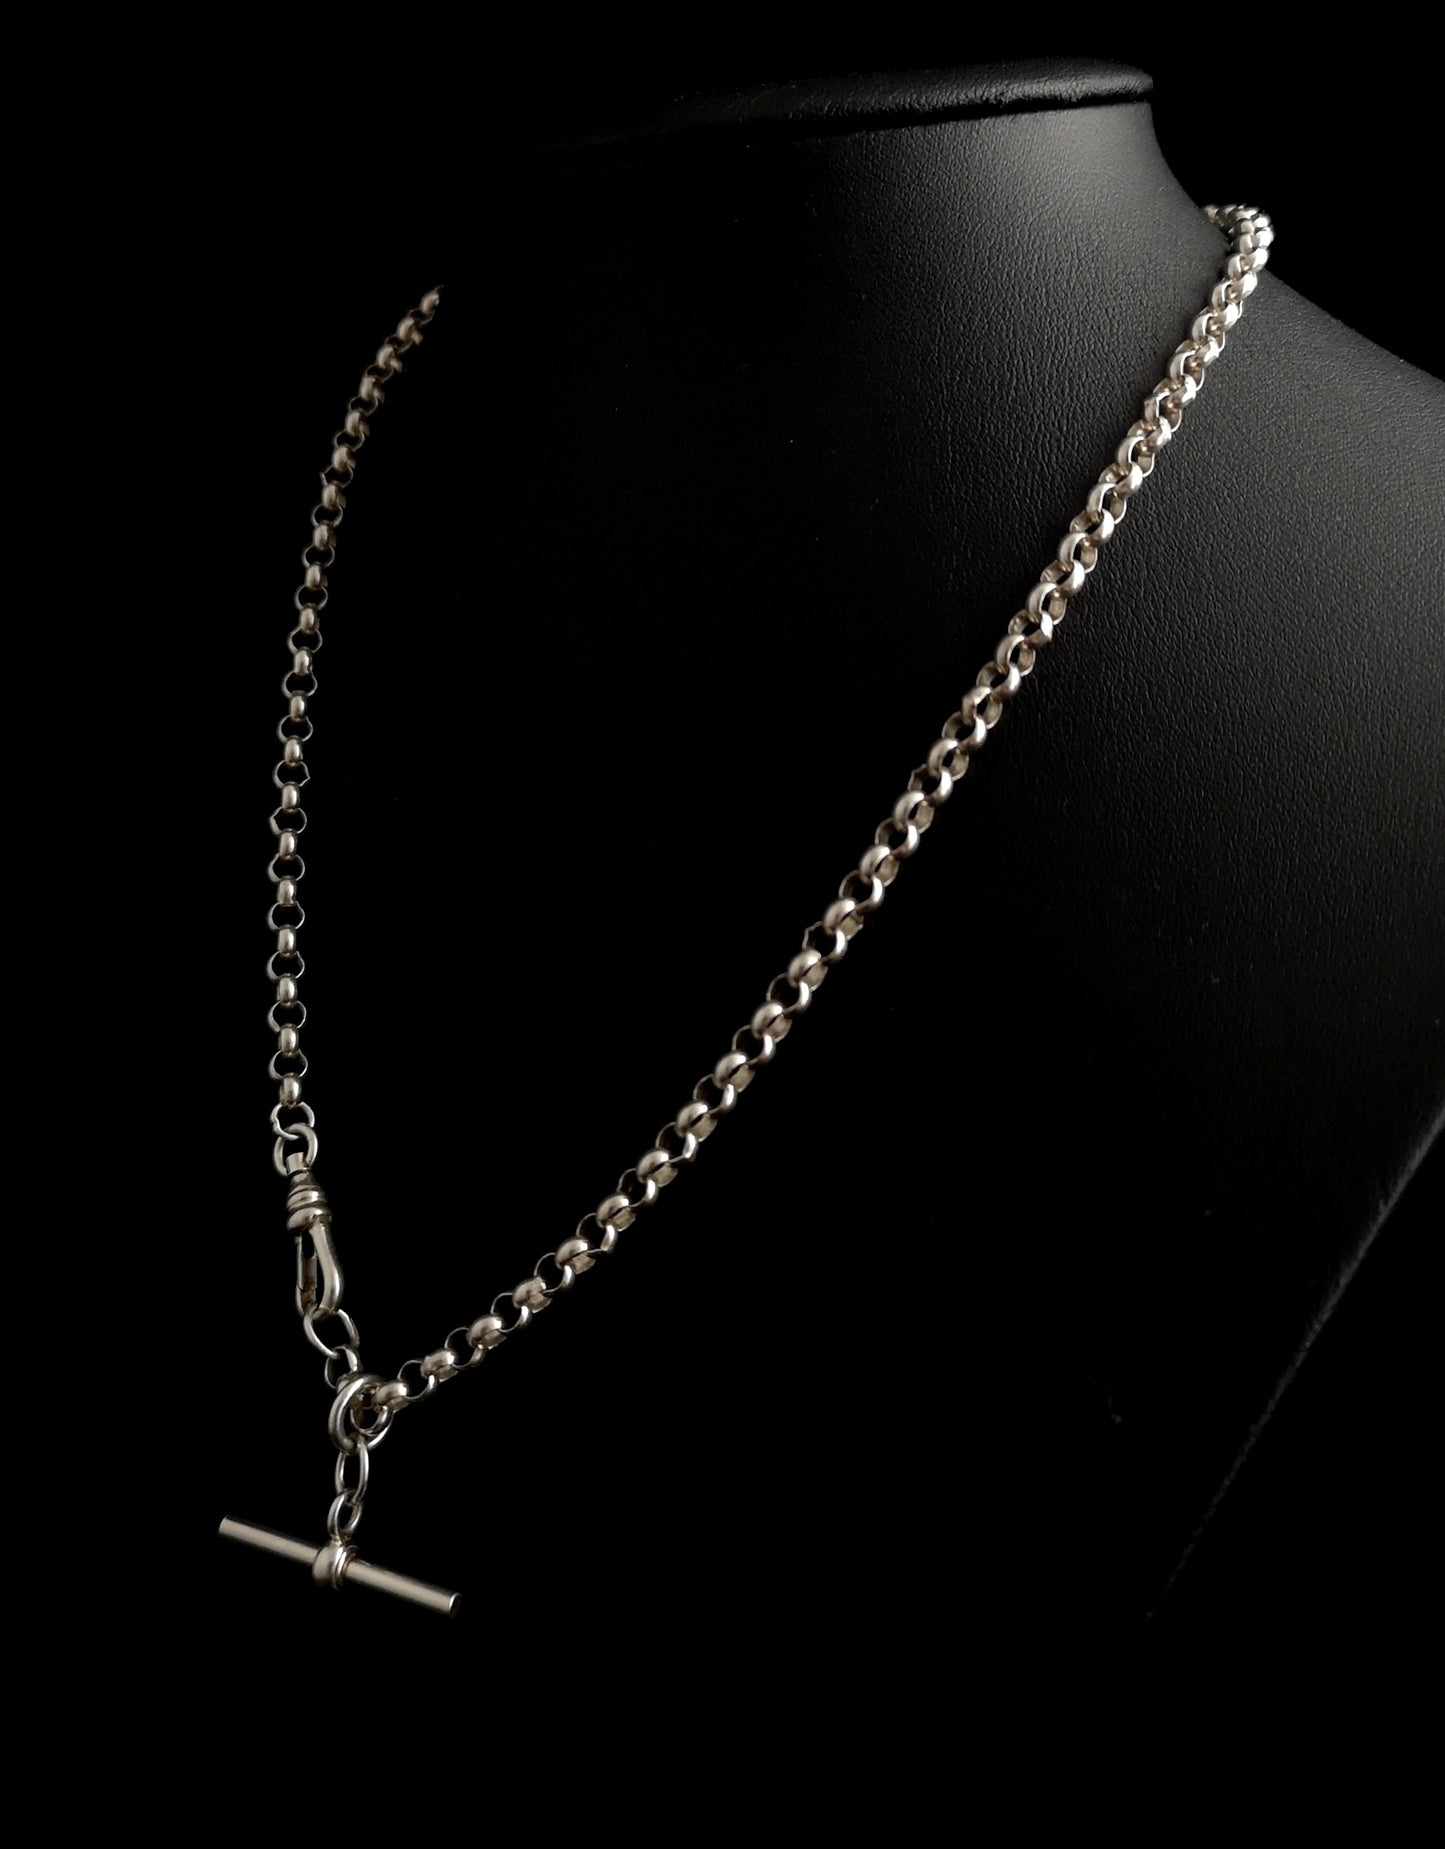 Vintage silver Albert chain style necklace, Belcher link